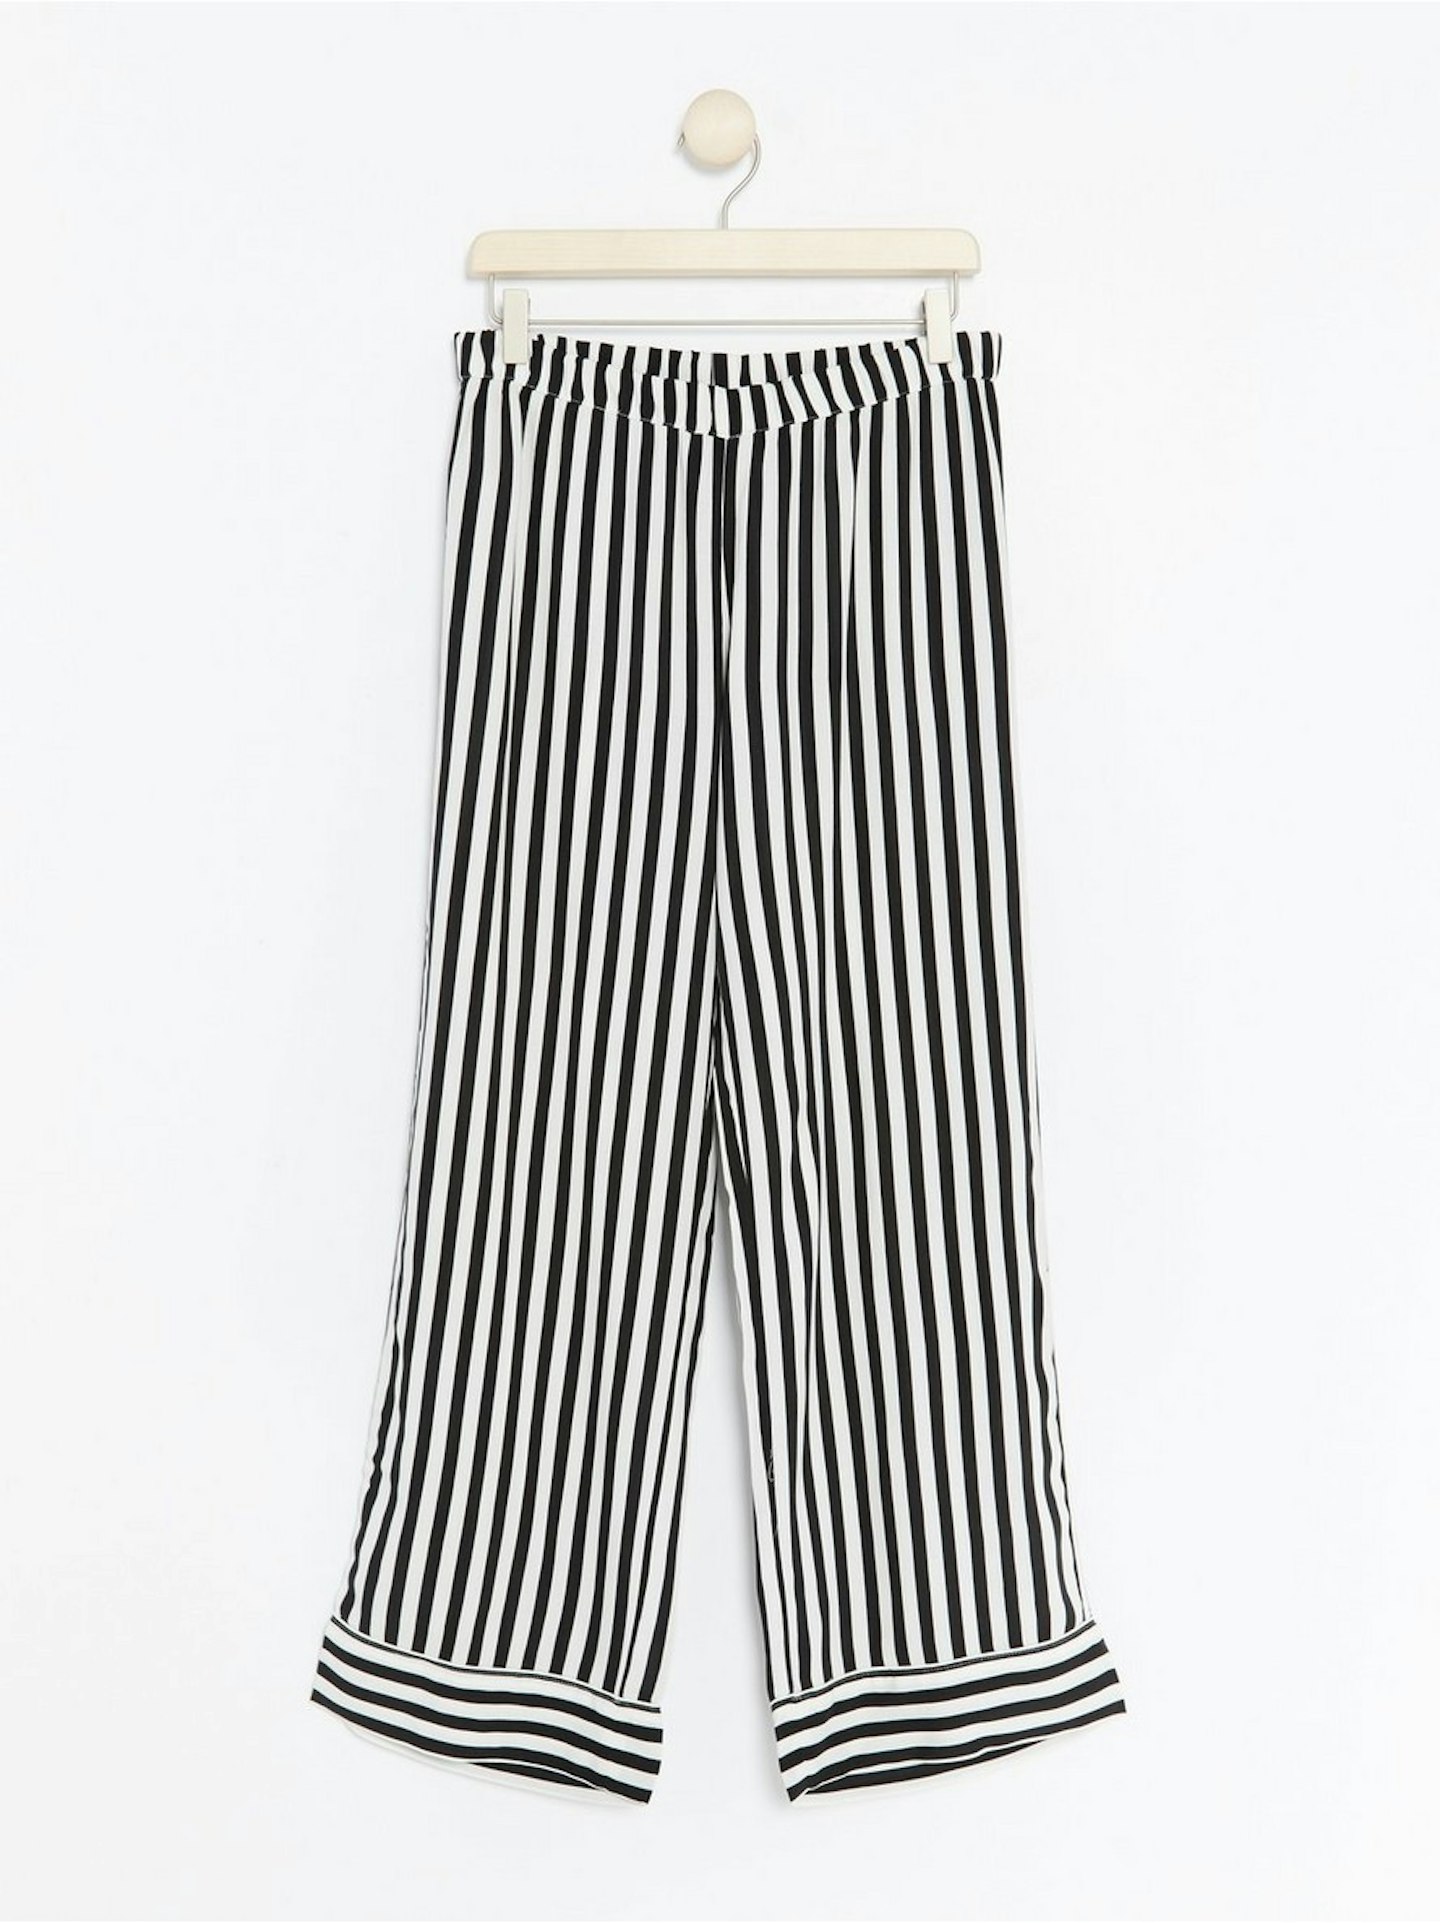 Lindex, Striped Pyjama Trousers, £19.99